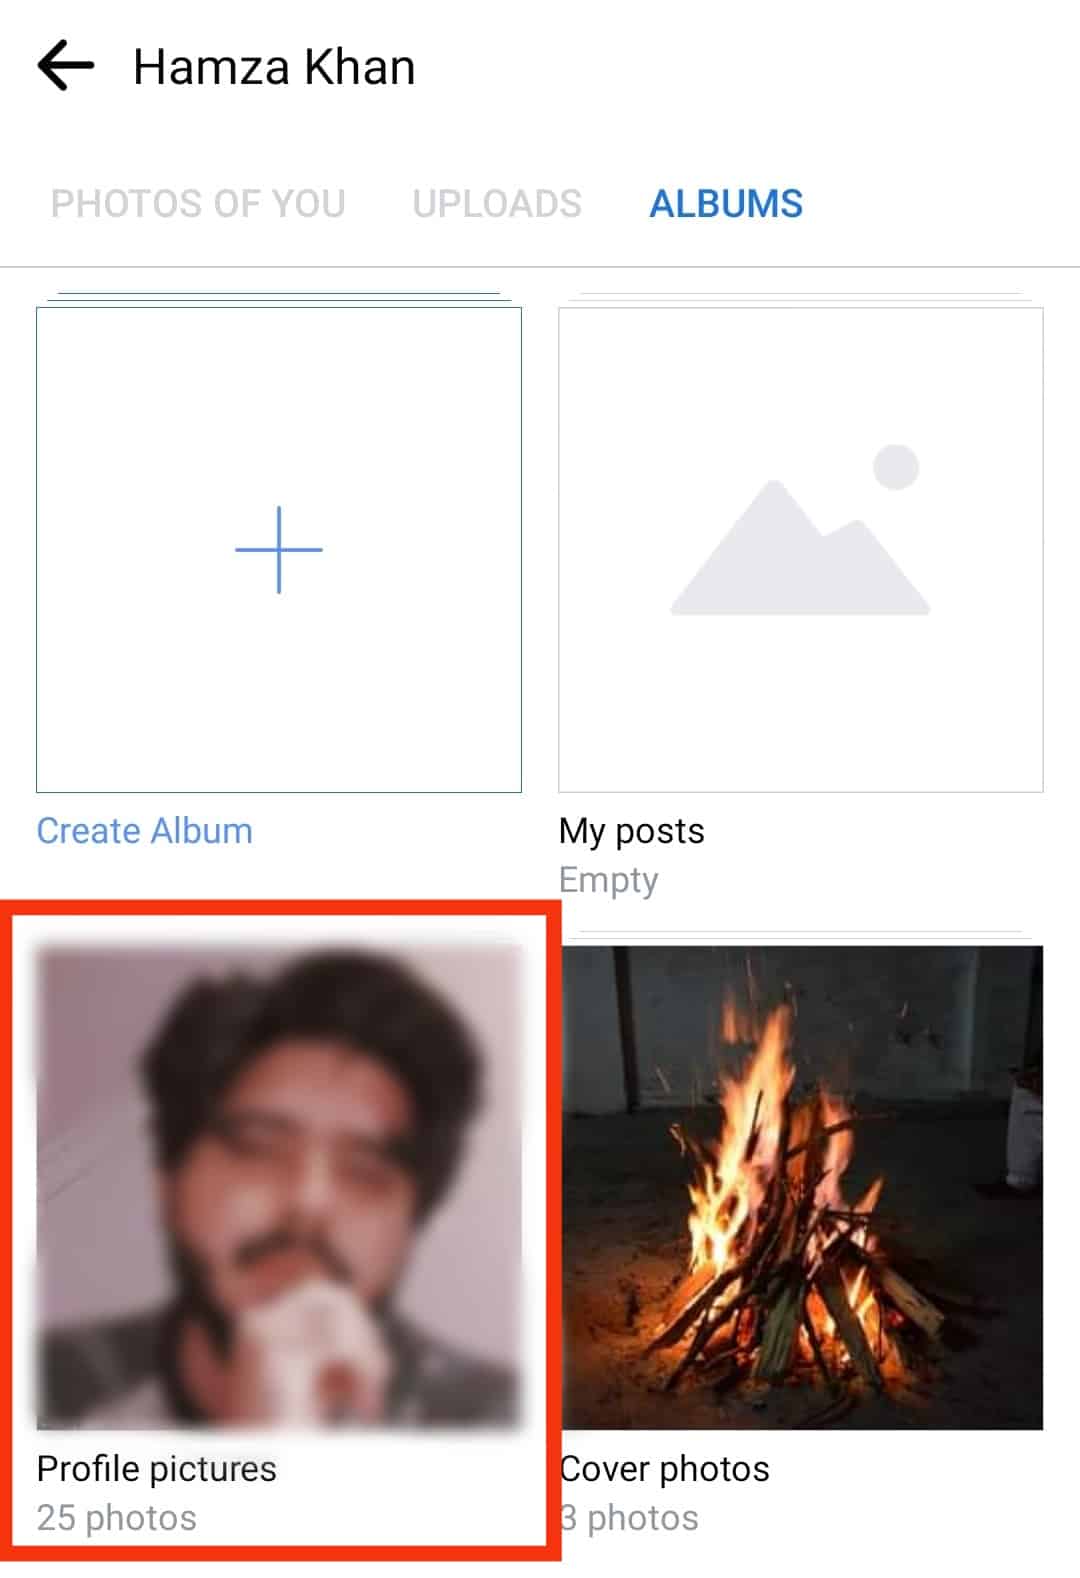 Select The Profile Pictures Album